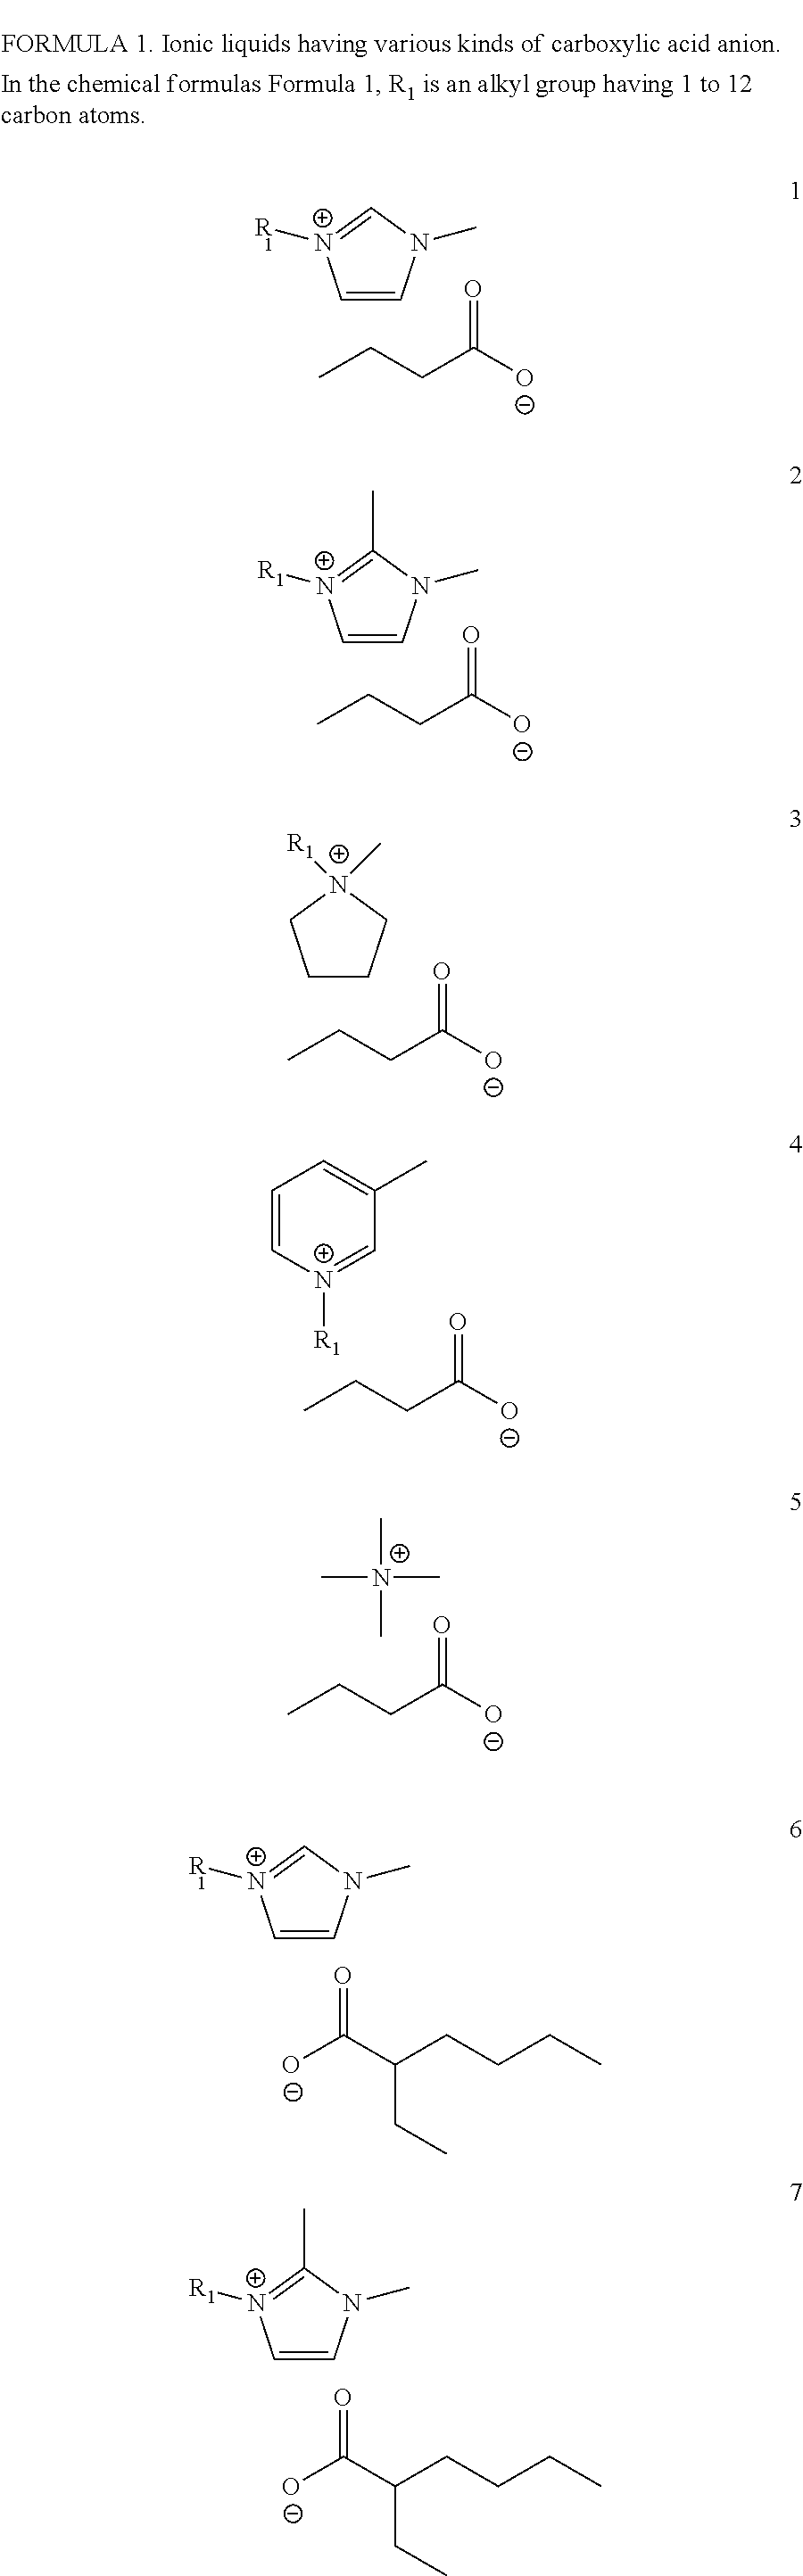 Method for preparing ionic liquid having carboxylic acid anion using microreactor